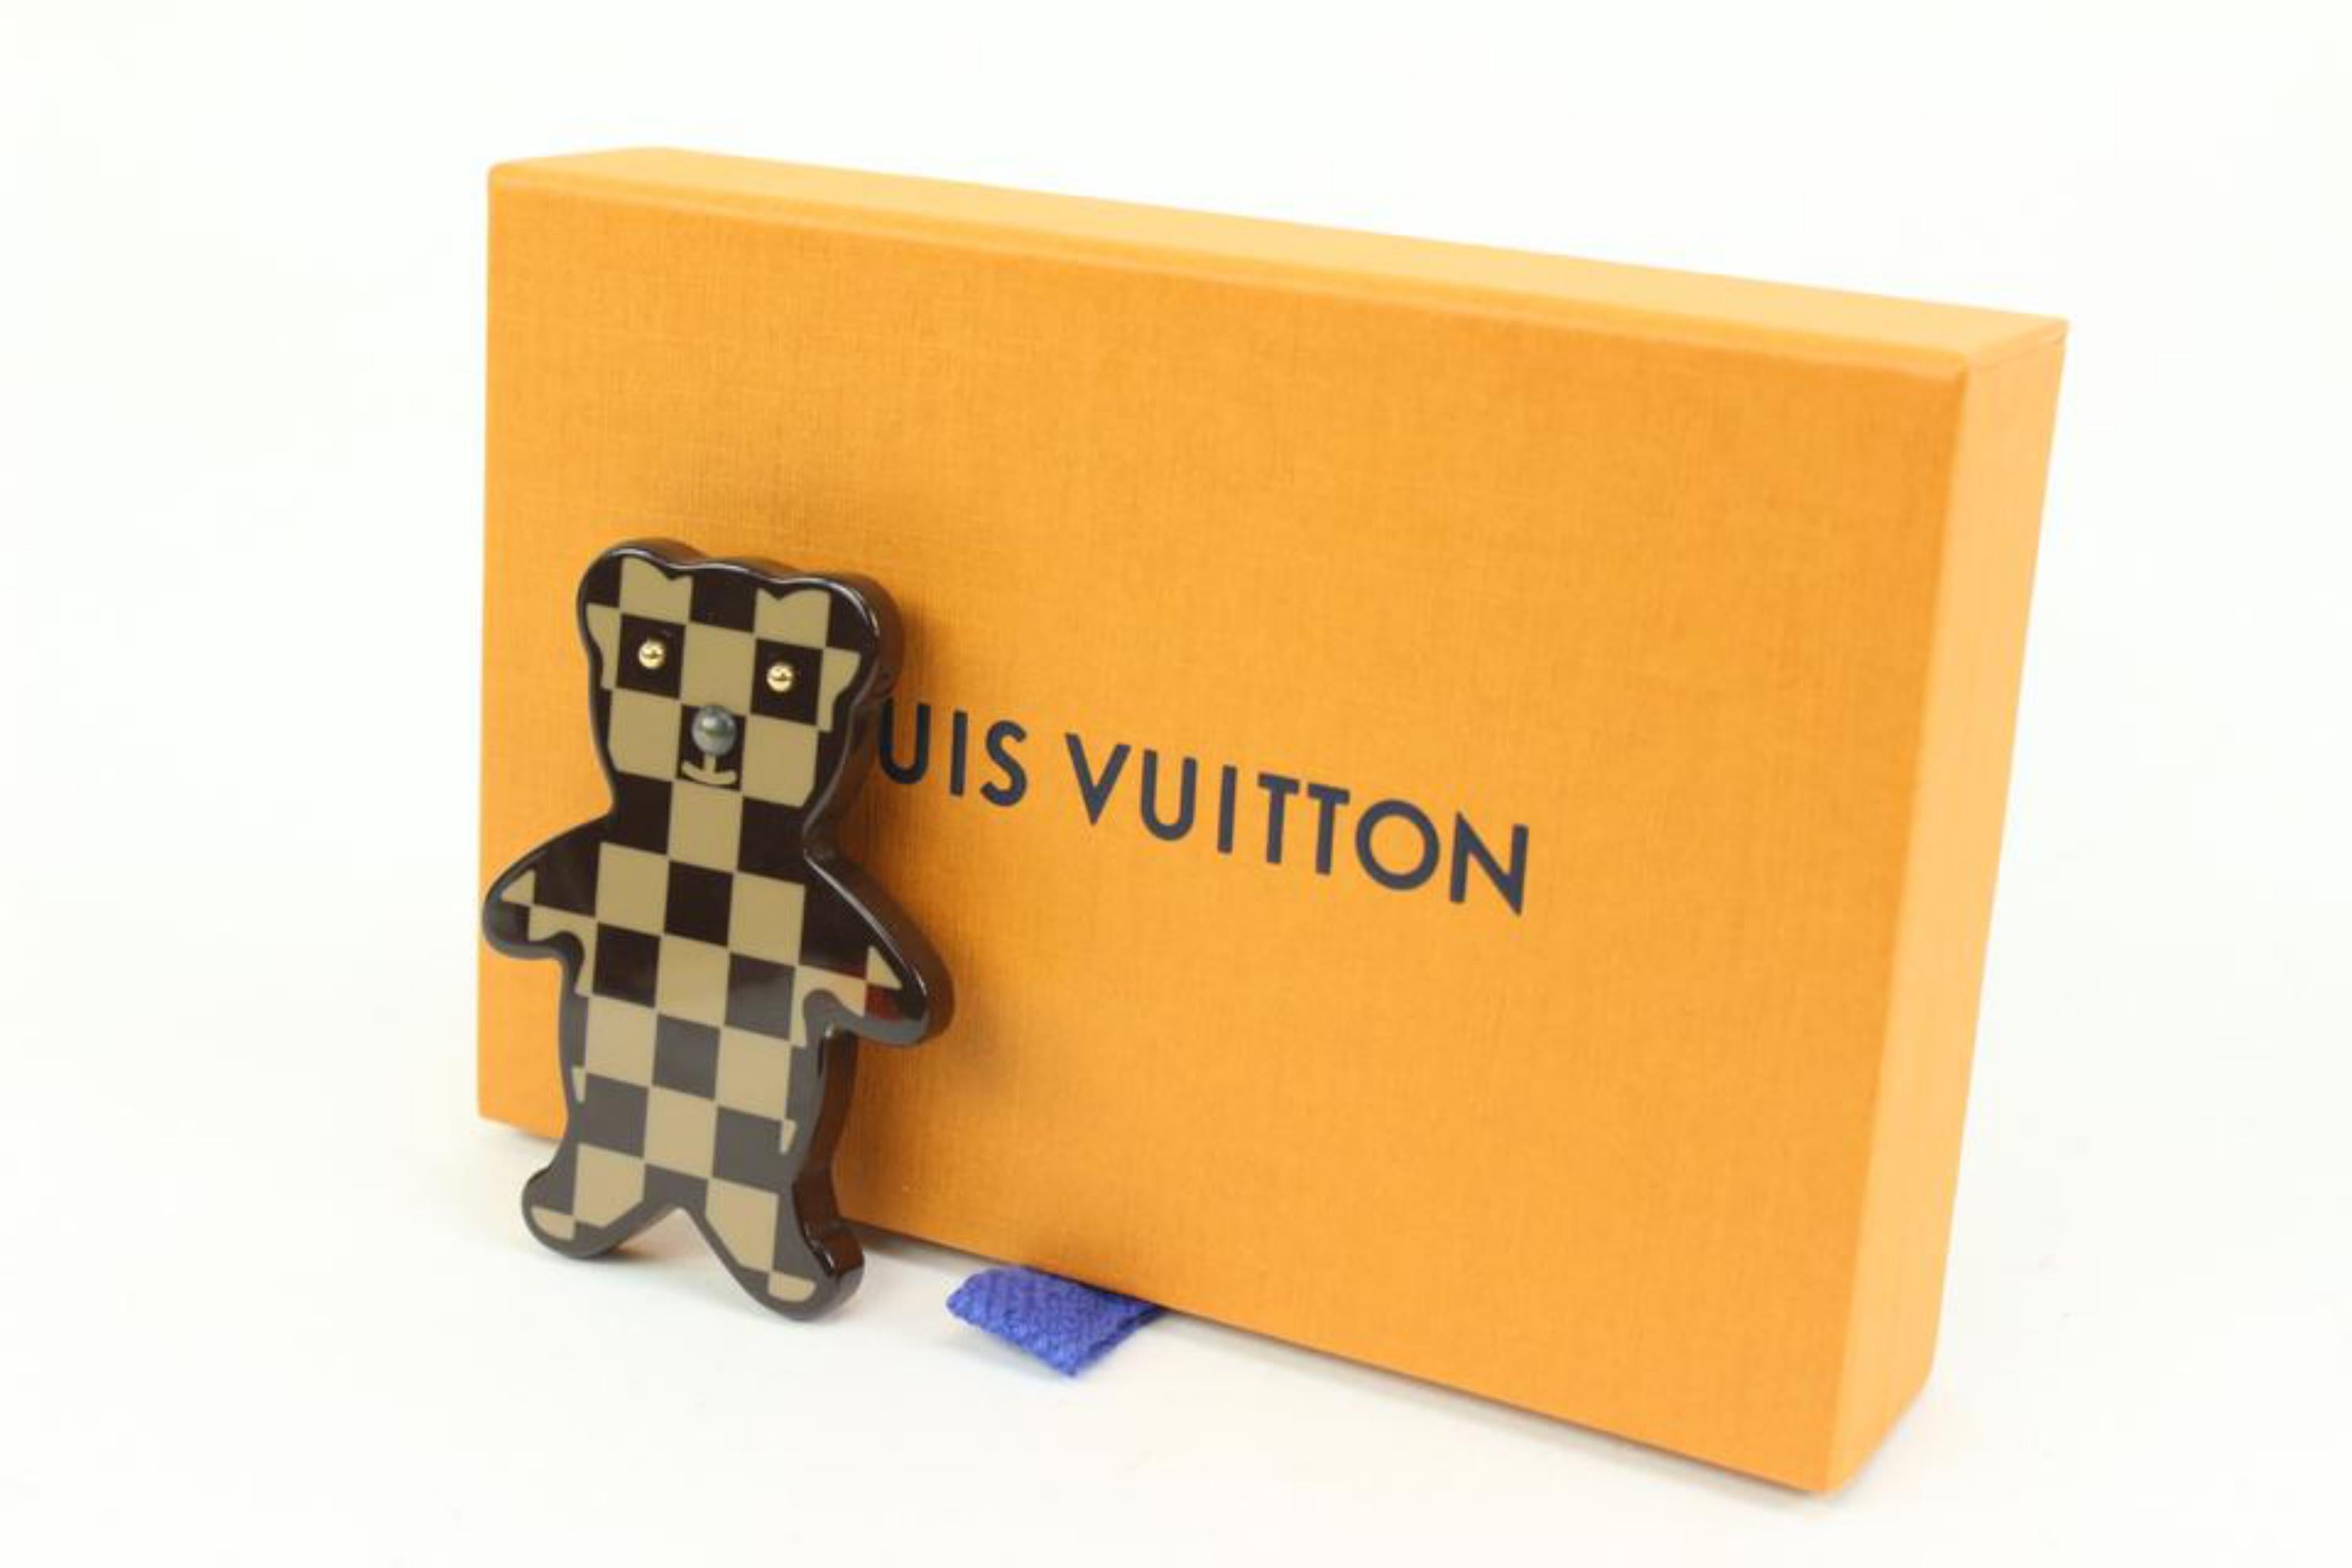 Louis Vuitton 2005 Damier Ebene Teddy Bear Pin Broochs331lk43
Measurements: Length:  2.5